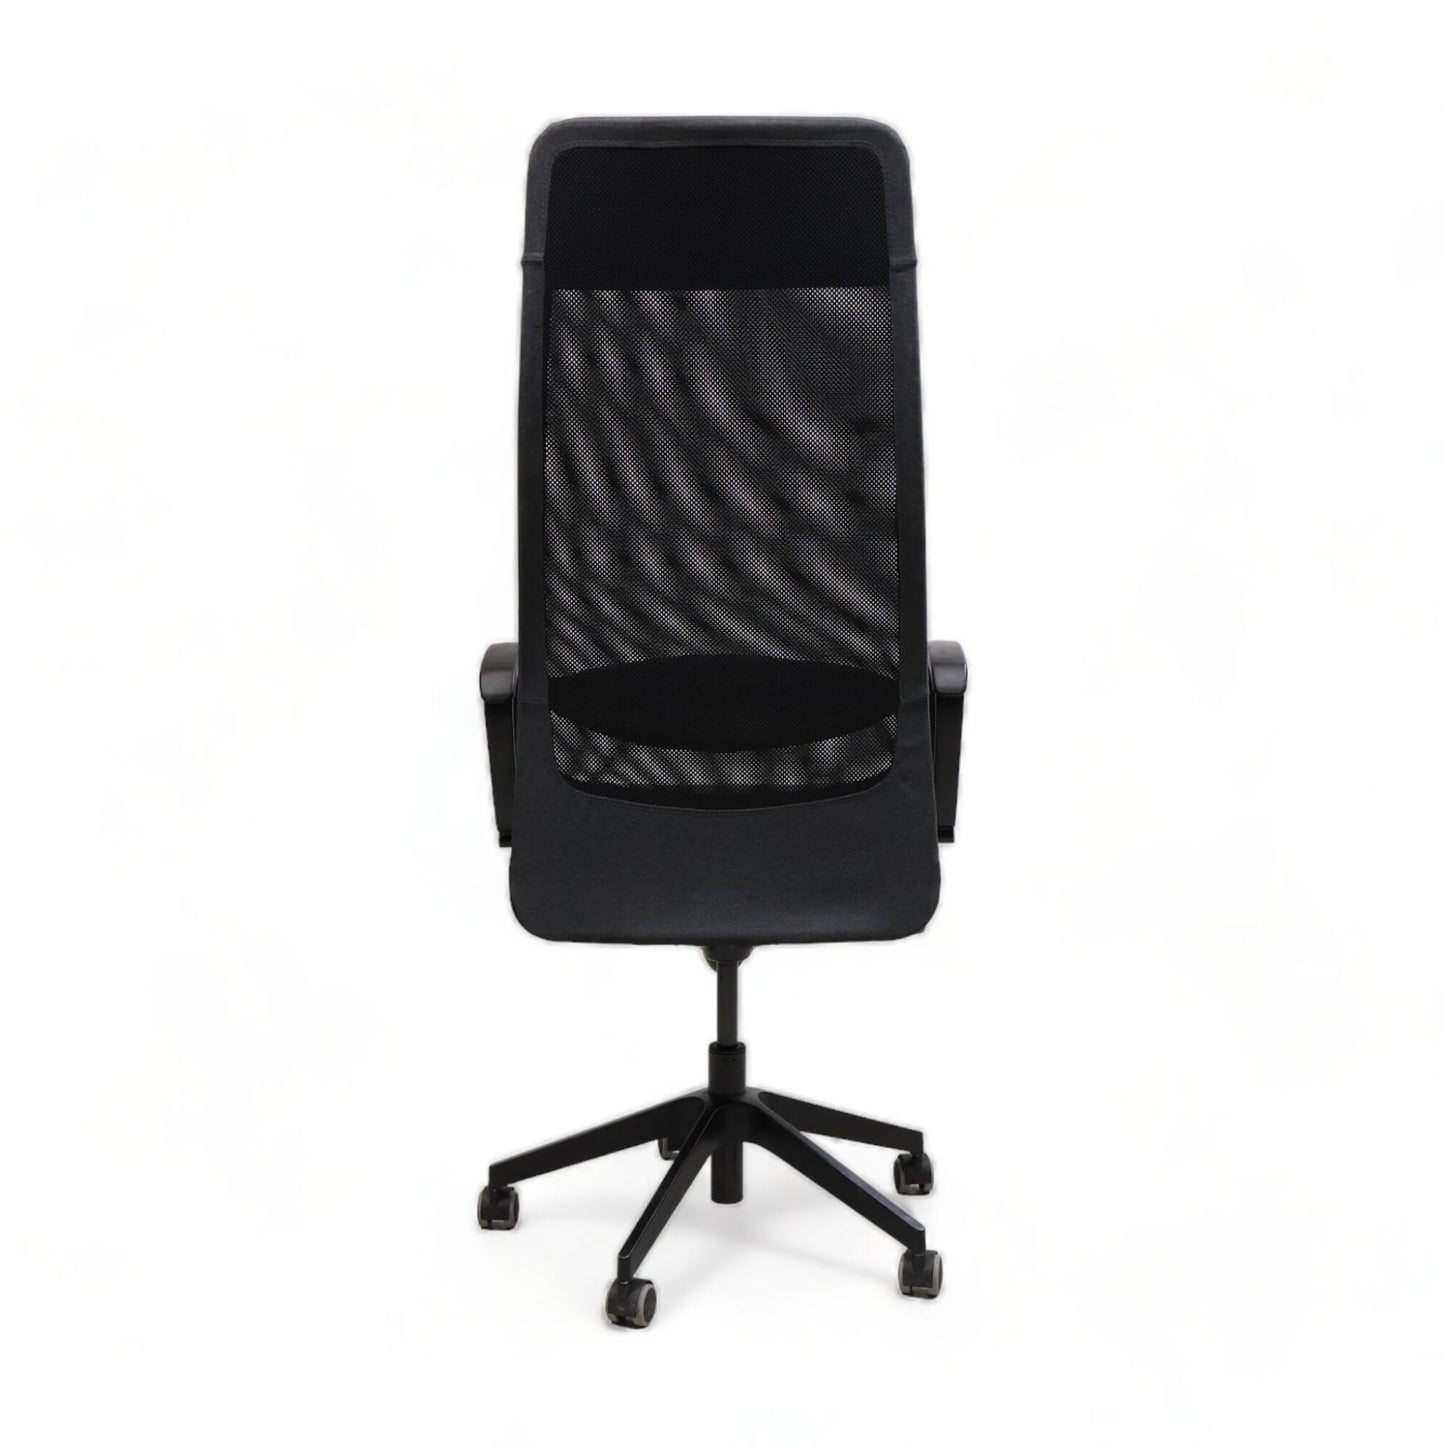 Kvalitetssikret | Mørk grå IKEA Markus kontorstol